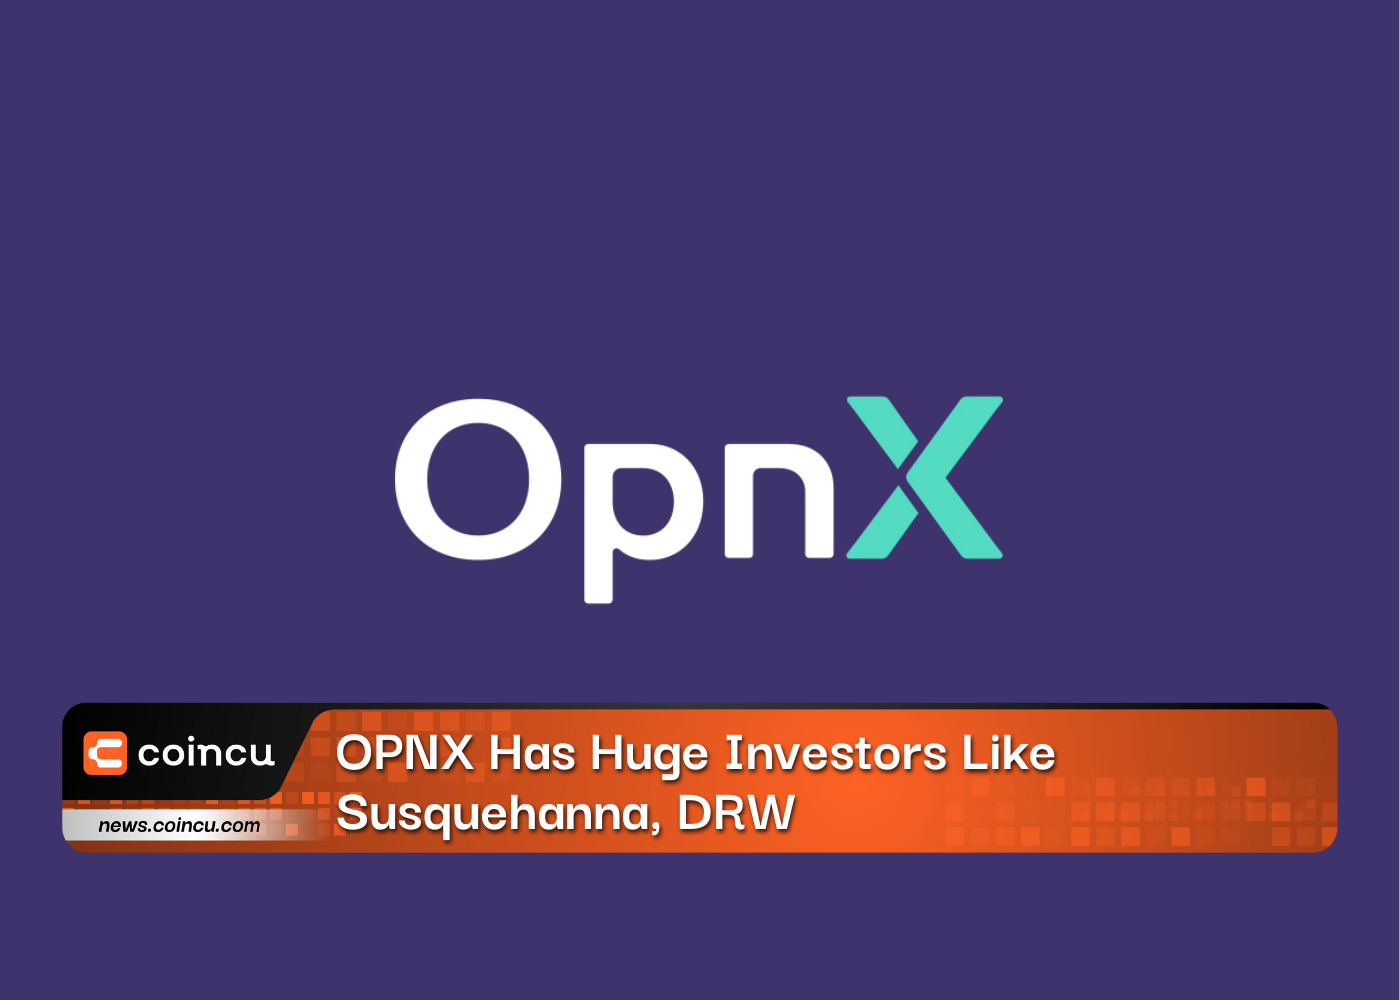 OPNX Has Huge Investors Like Susquehanna, DRW